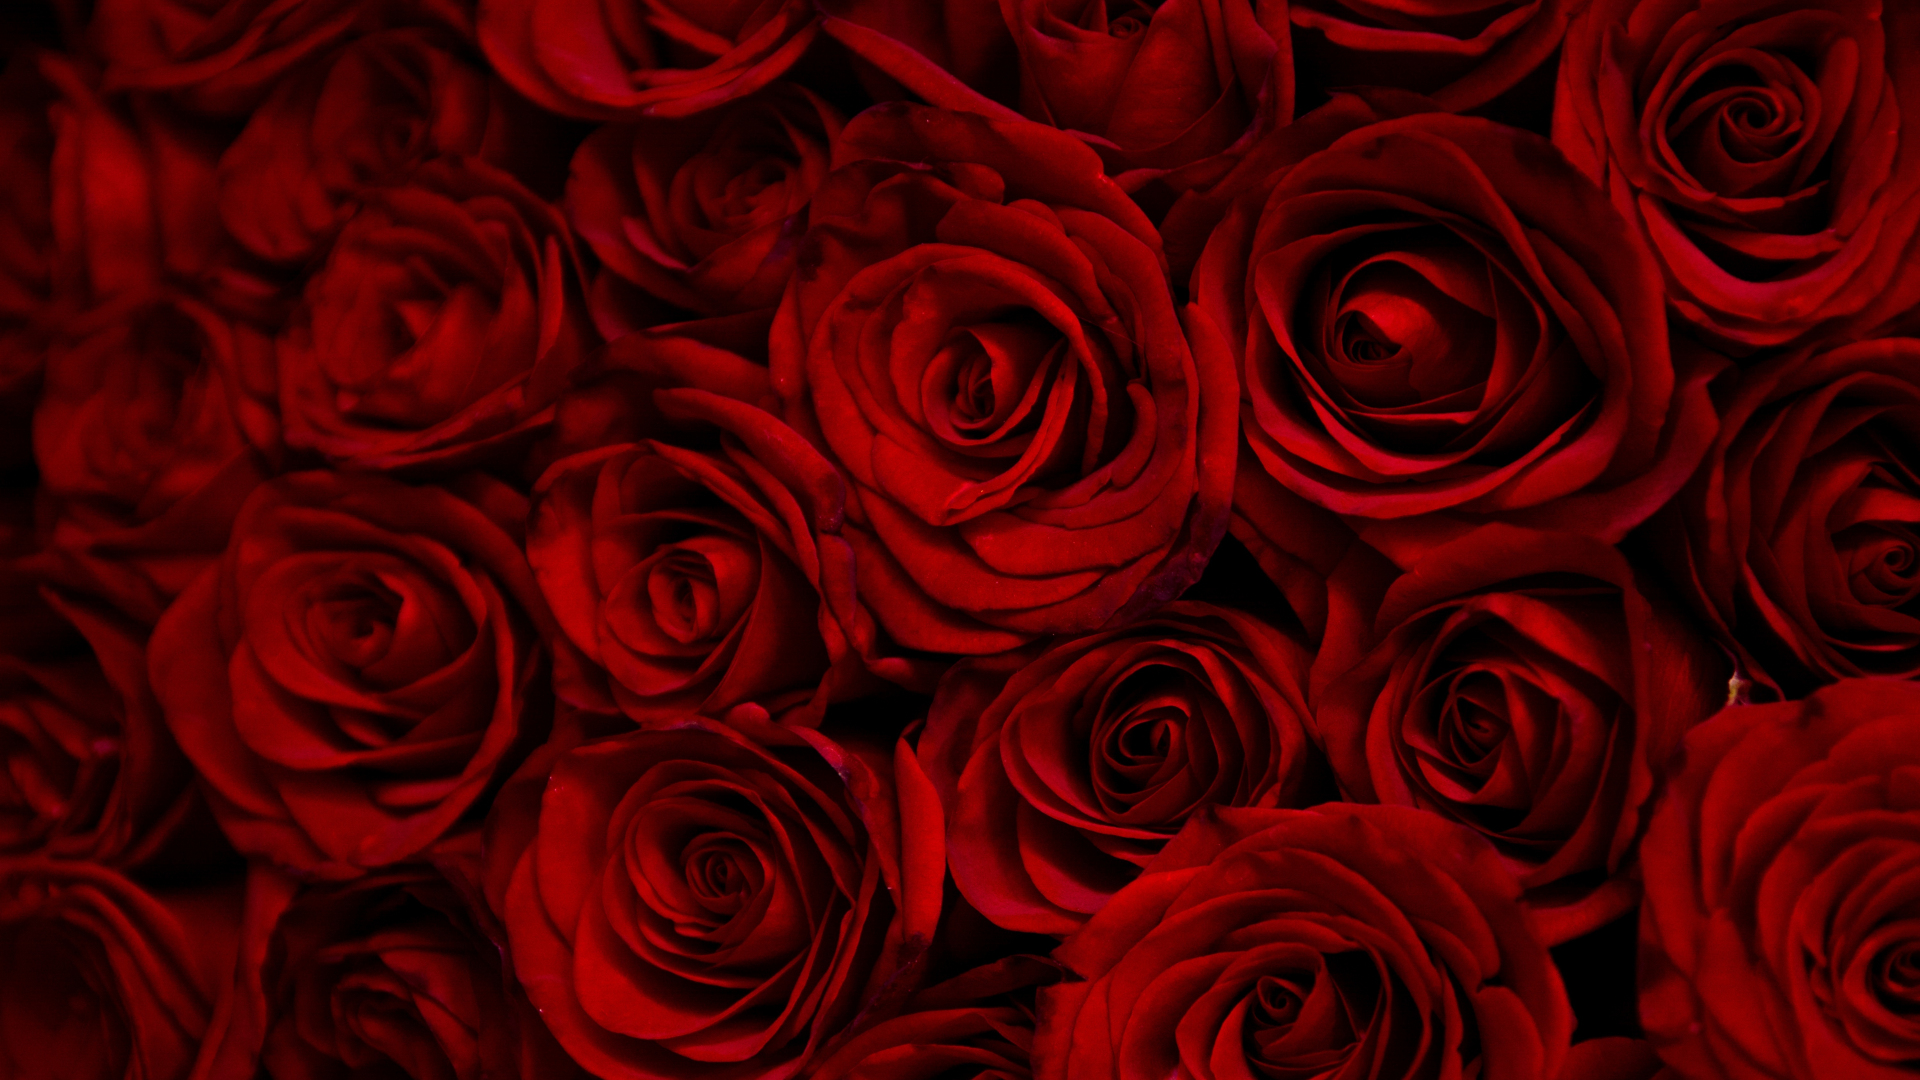 Download wallpaper 1920x1080 dark, red roses, decorative, full hd, hdtv,  fhd, 1080p wallpaper, 1920x1080 hd background, 9700